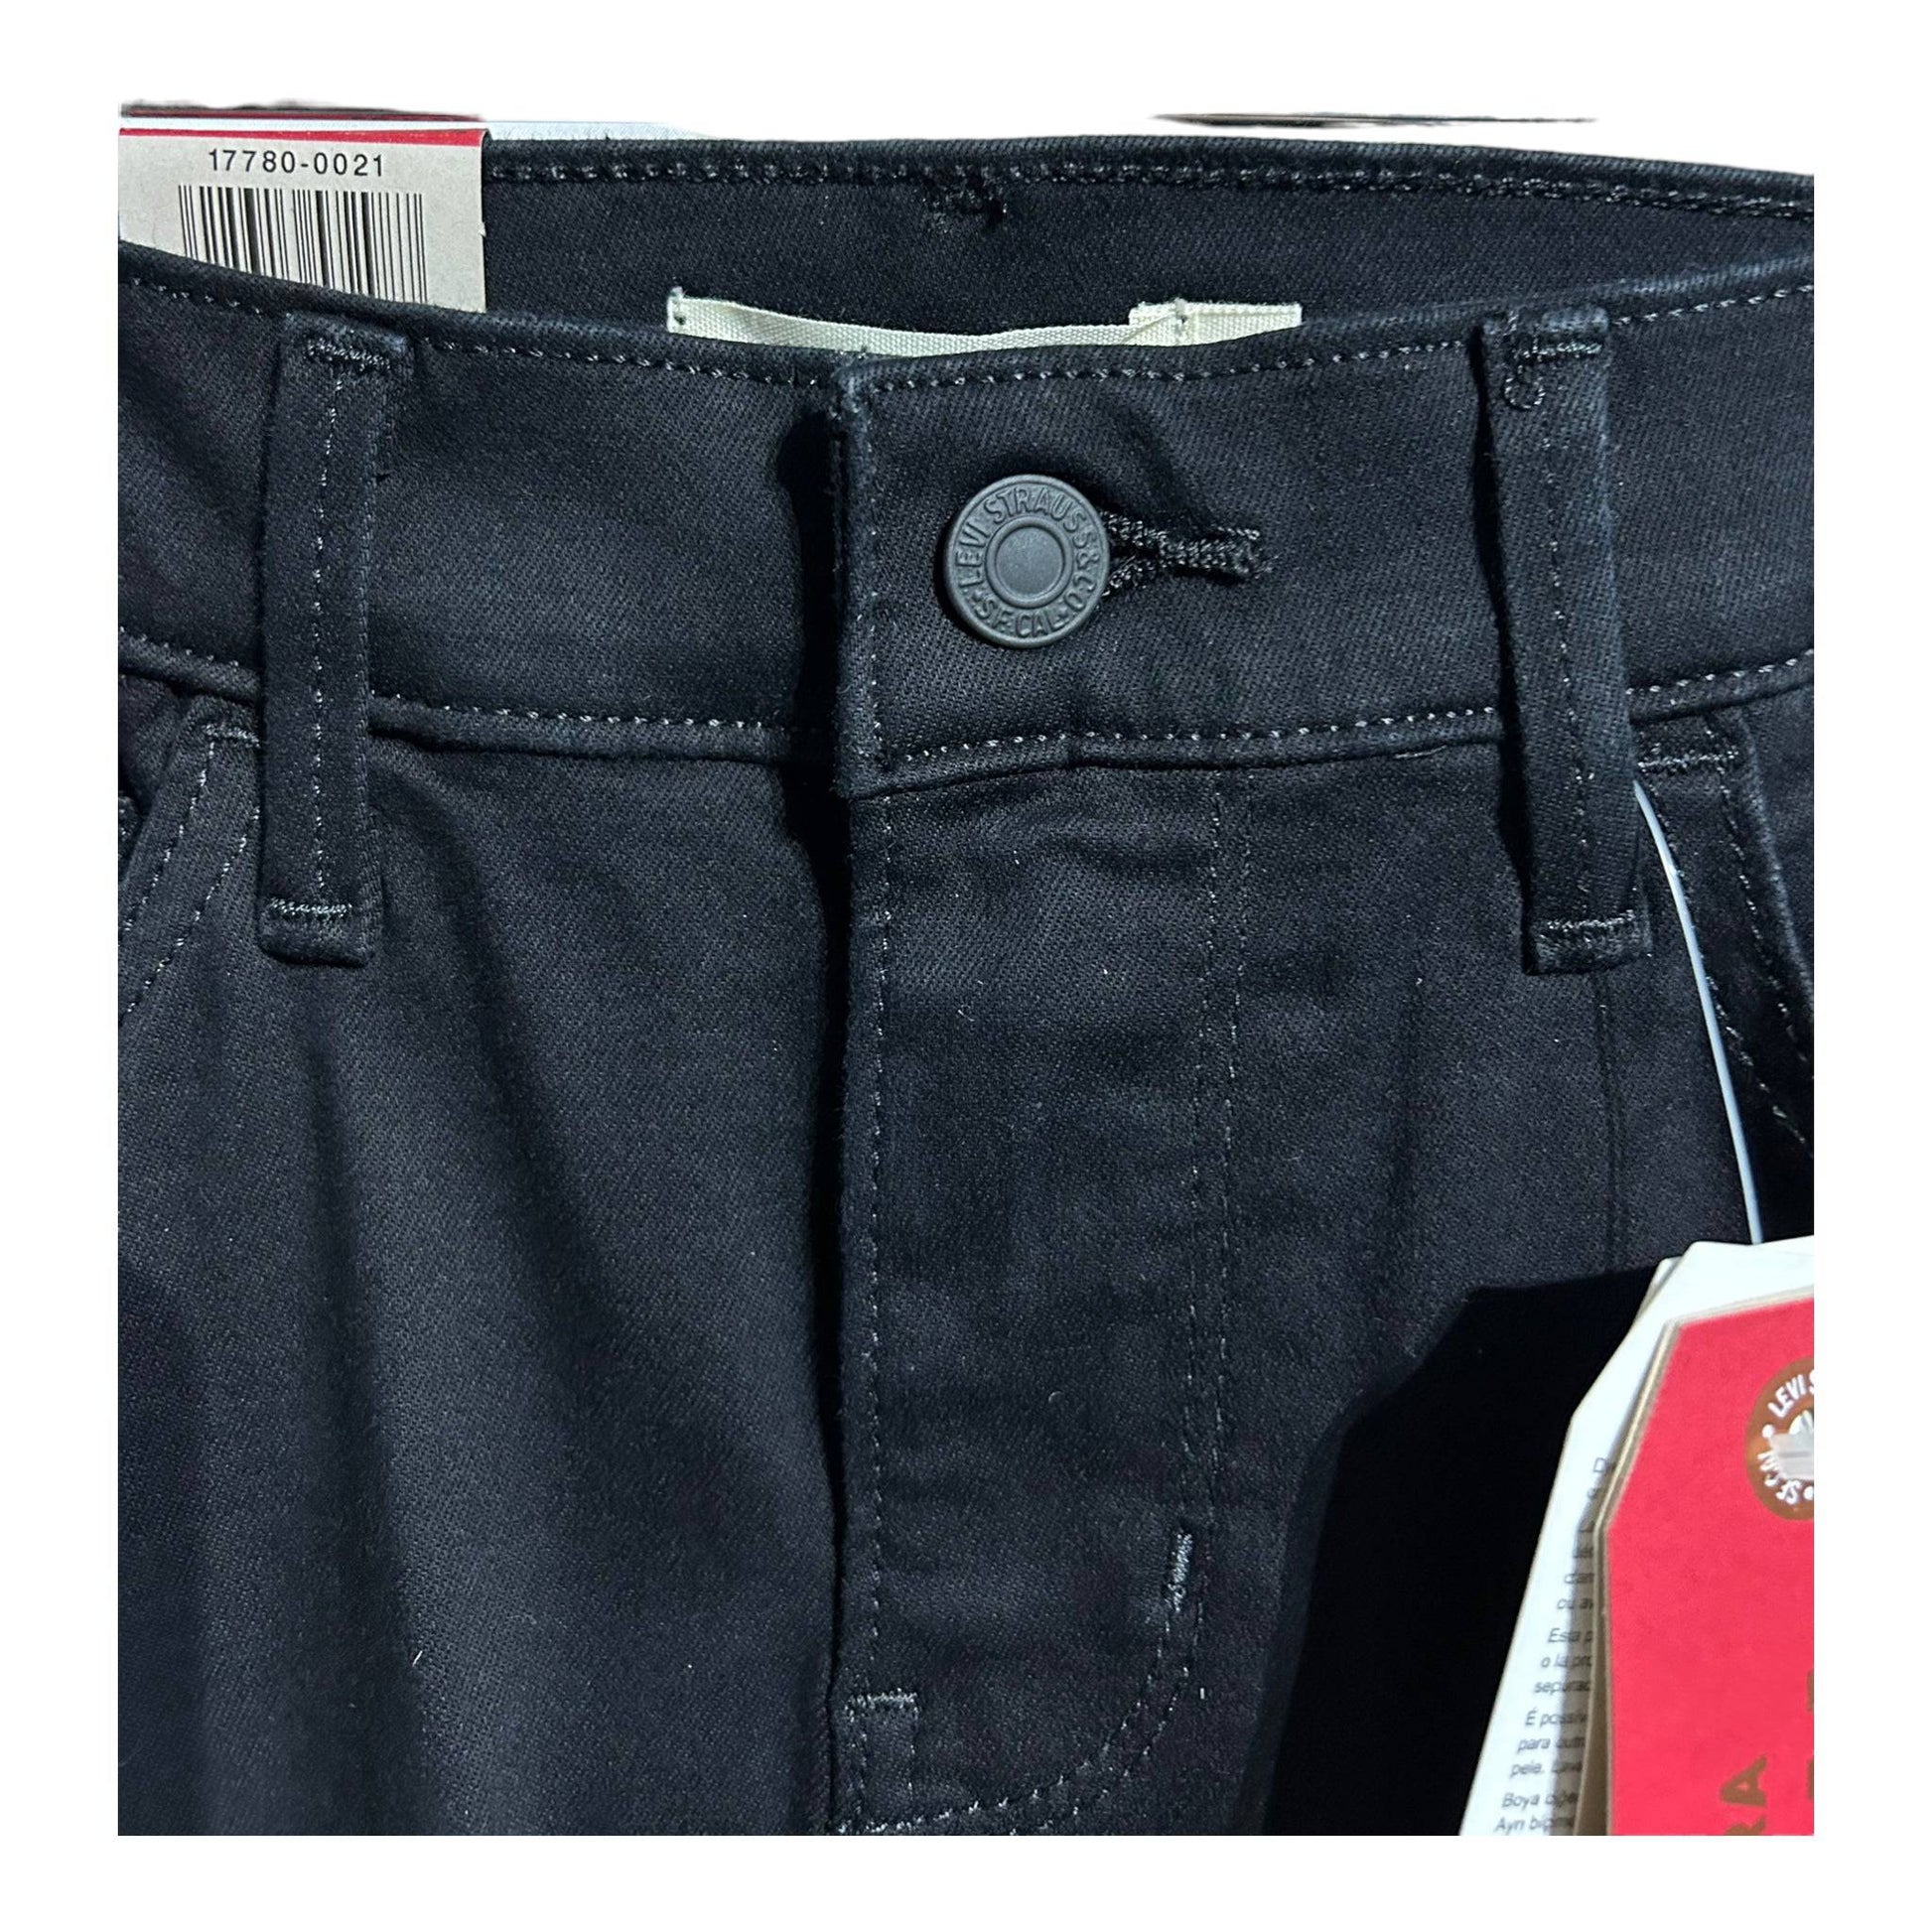 Levi's 710 Super Skinny Jeans - Recurring.Life